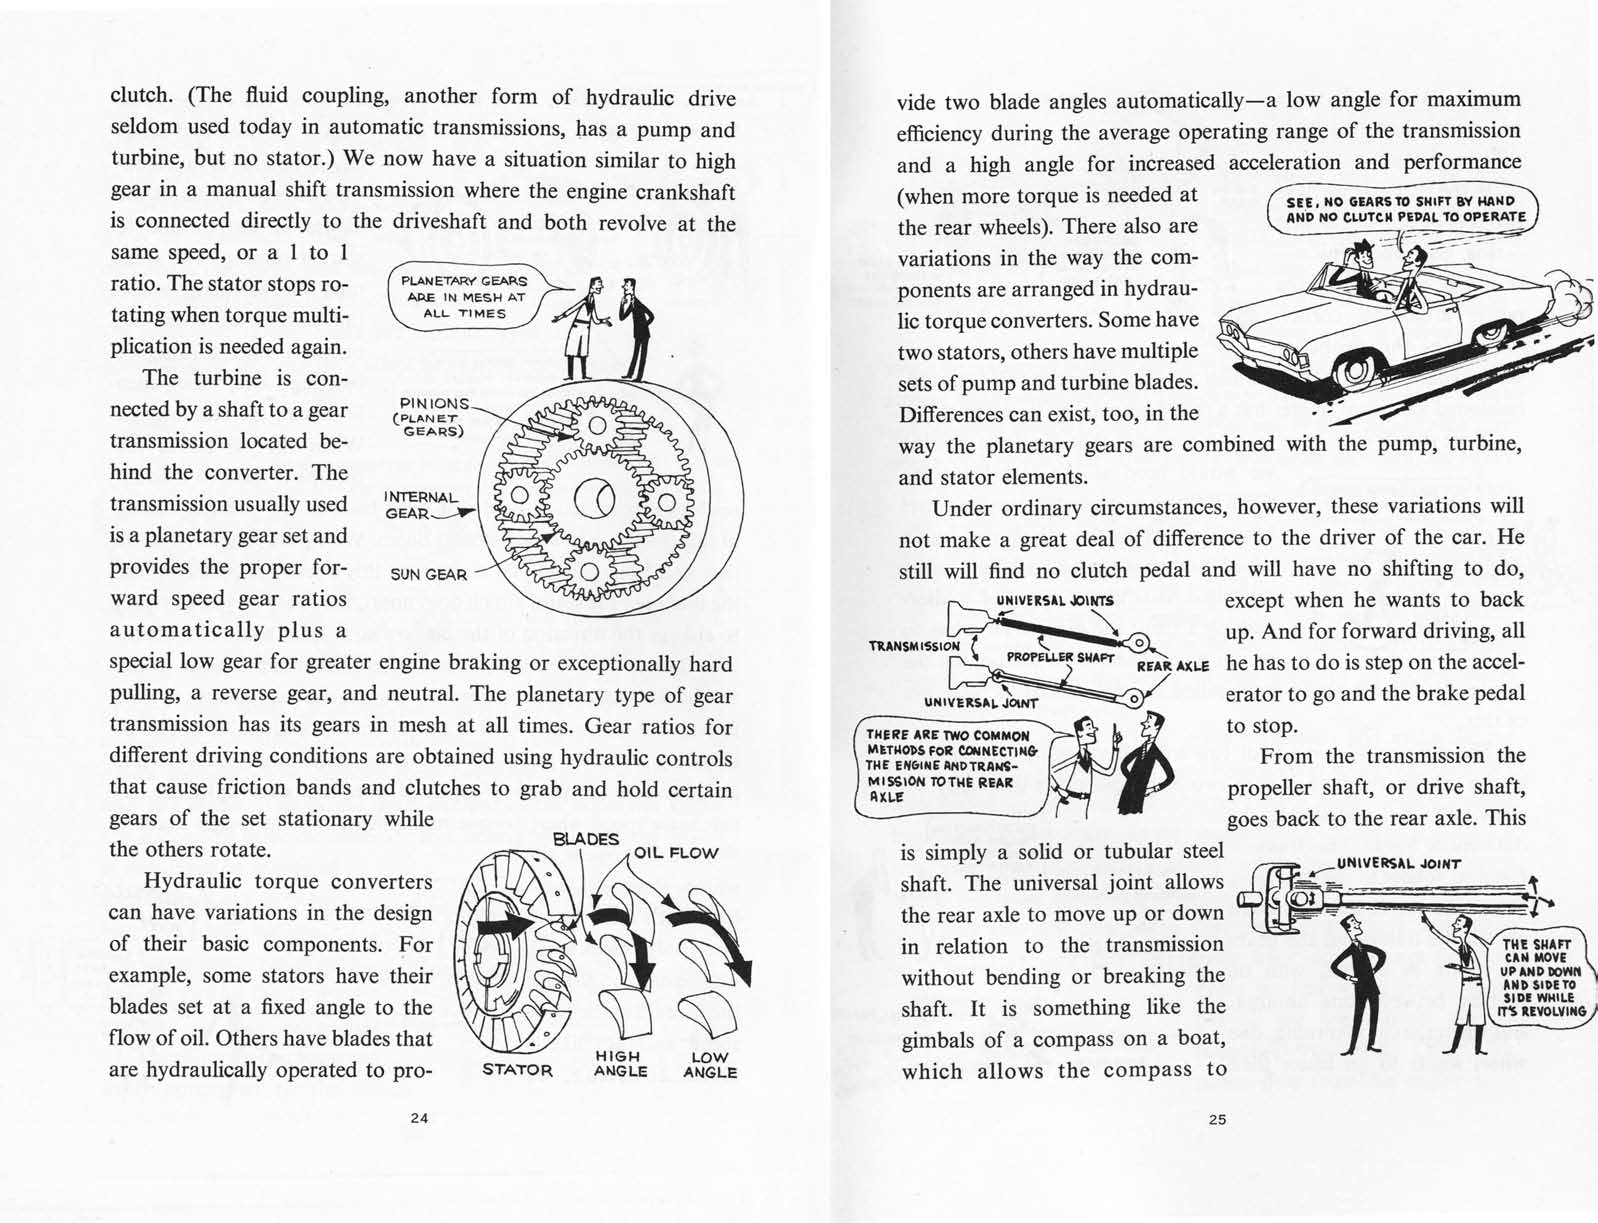 n_1953-How The Wheels Revolve-24-25.jpg